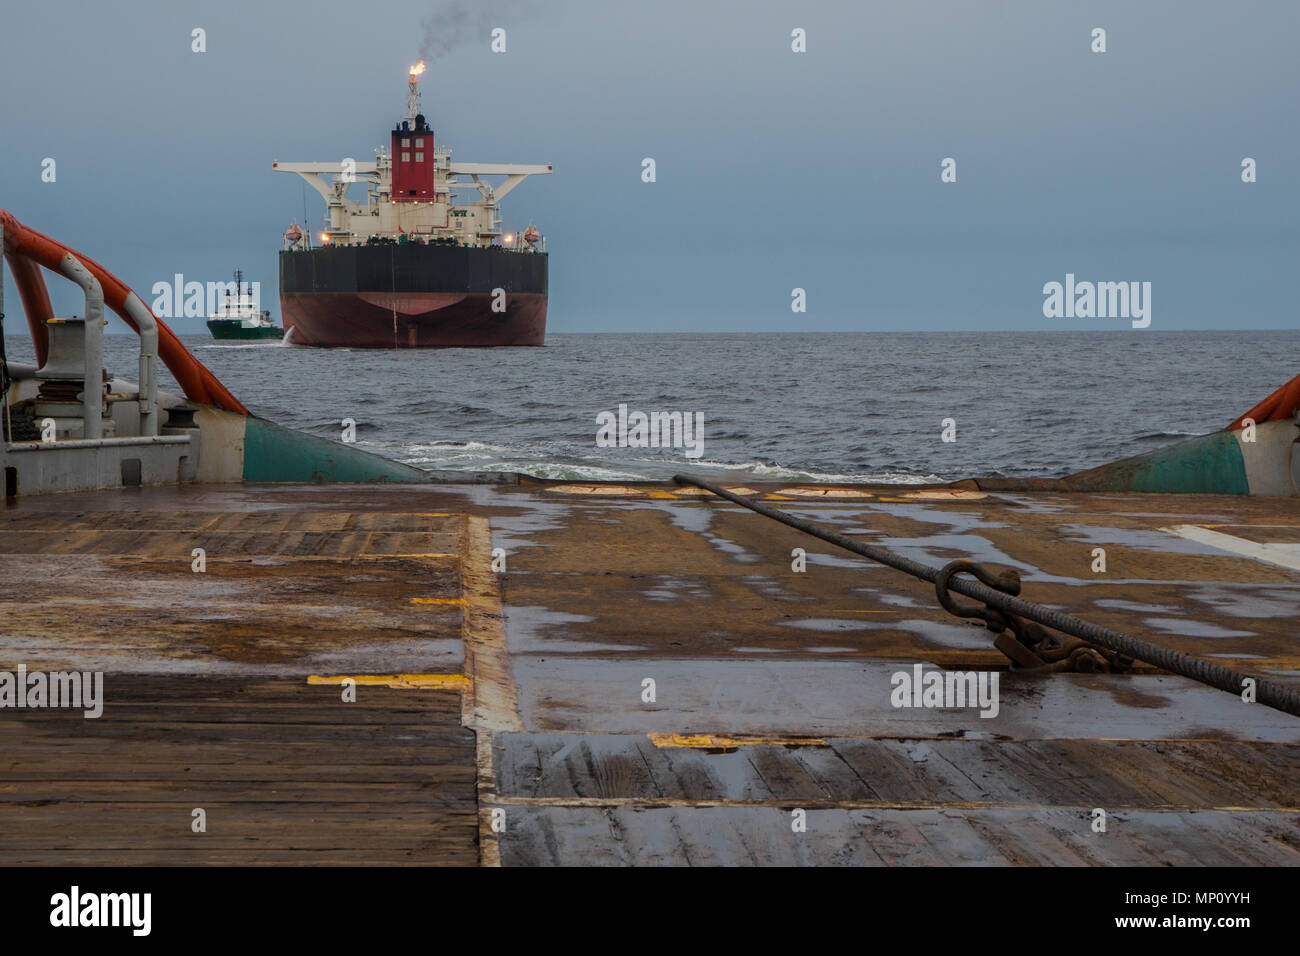 AHTS vessel doing static tow tanker lifting. Ocean tug job Stock Photo